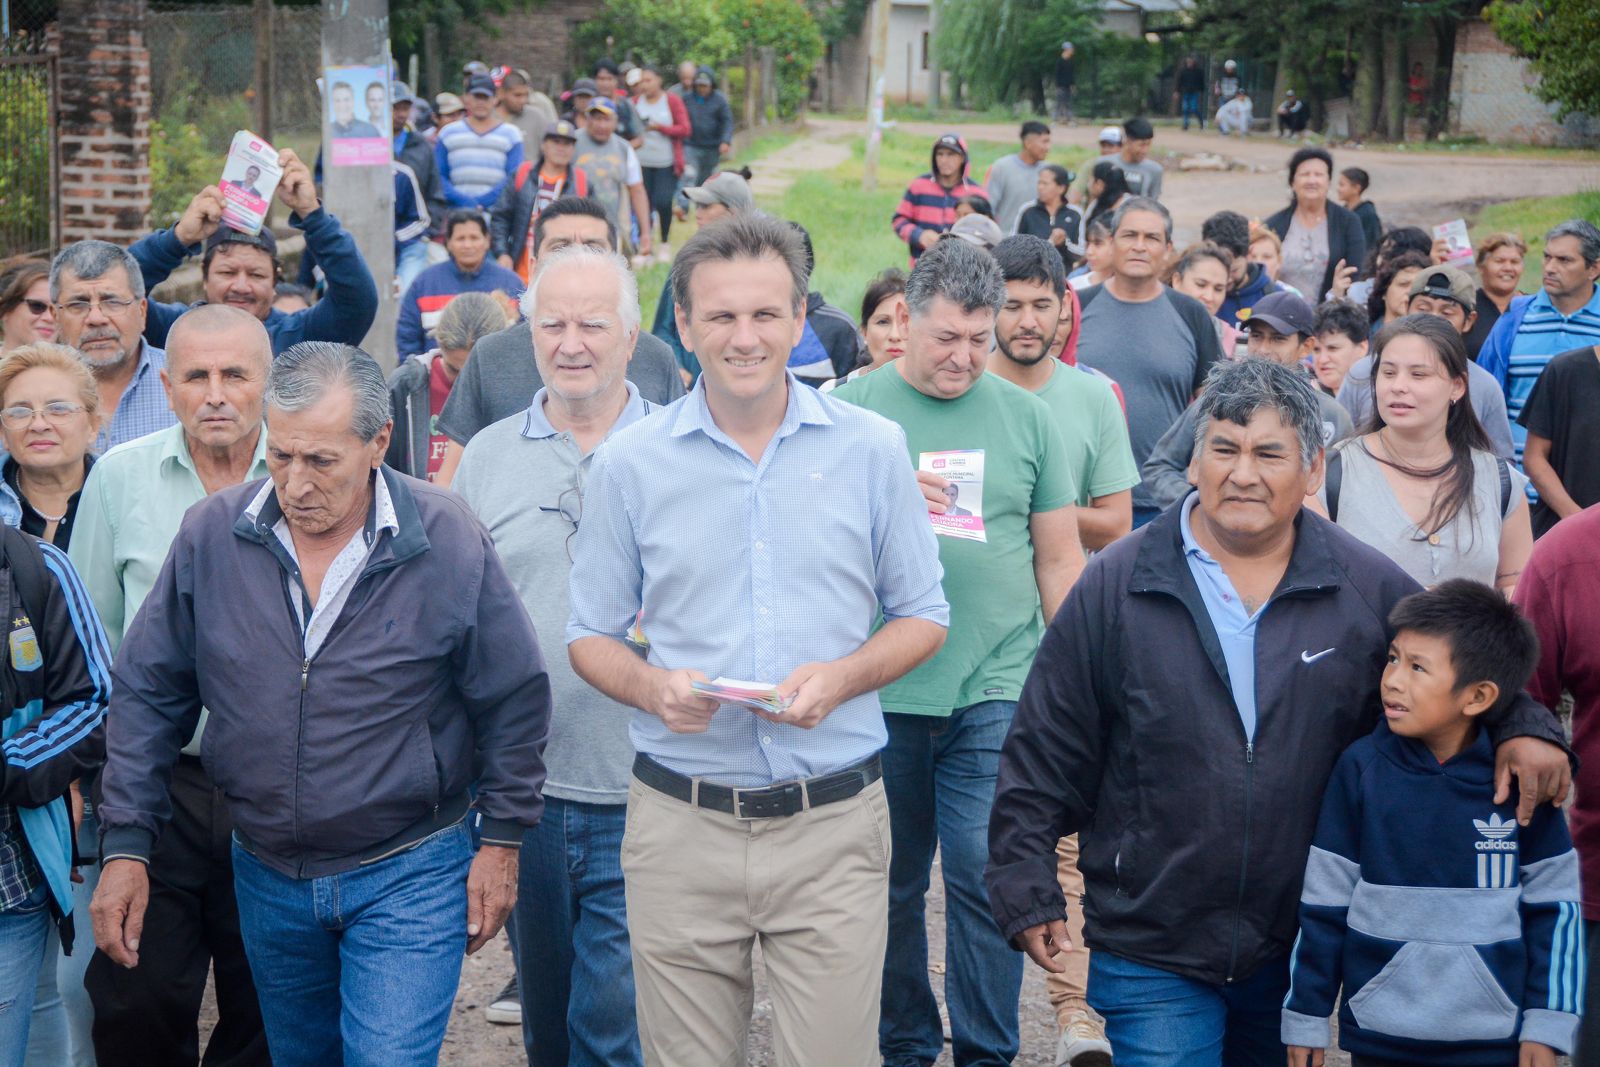 FERNANDO CUADRA: “CON EL APOYO DEL GOBERNADOR ZDERO VAMOS A SACAR A FONTANA ADELANTE”